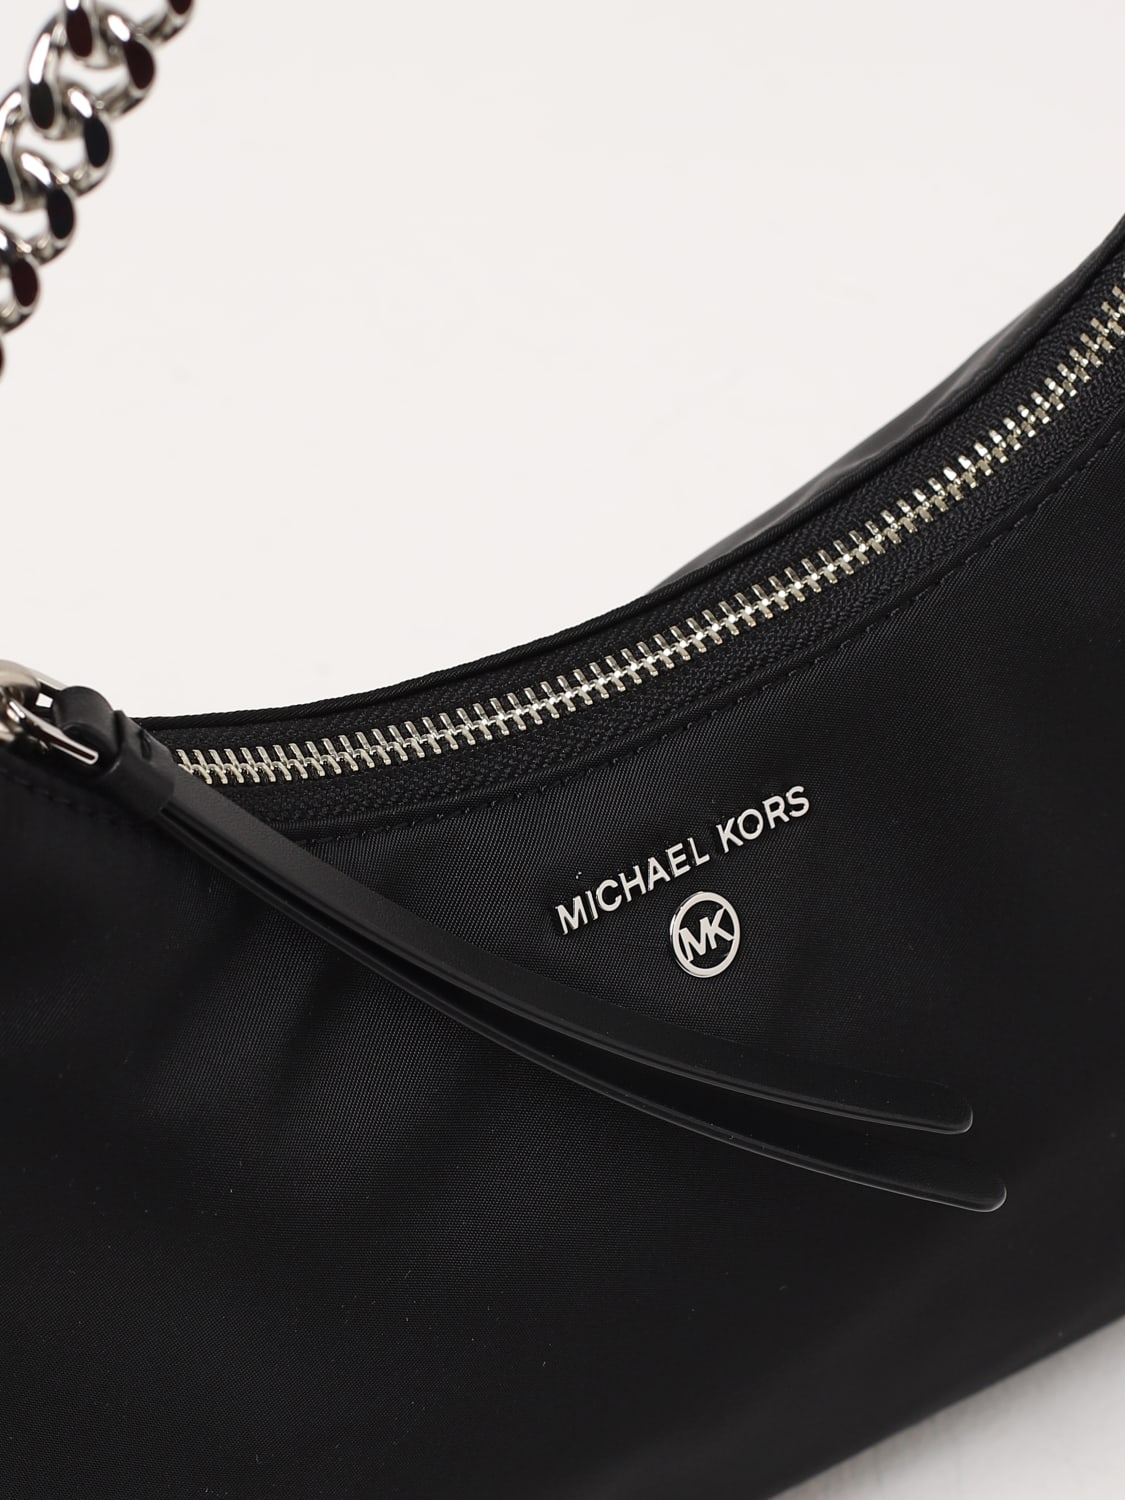 Michael Michael Kors Woman's Shoulder Bag